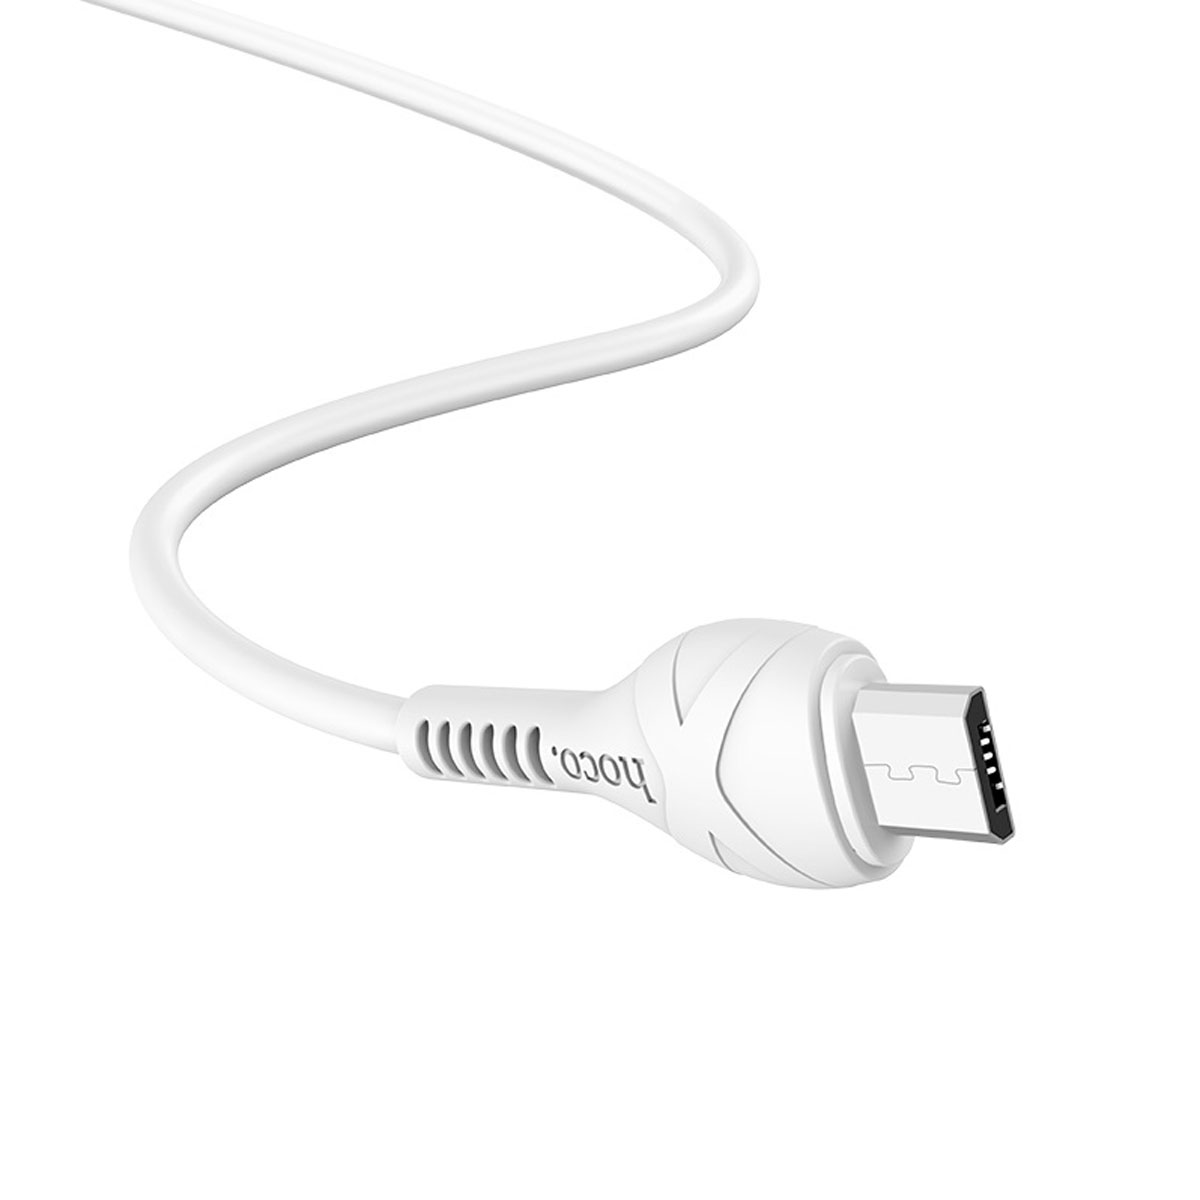 Кабель Micro USB, HOCO X37 Cool Power, длина 1 метр, 2.4A, цвет белый